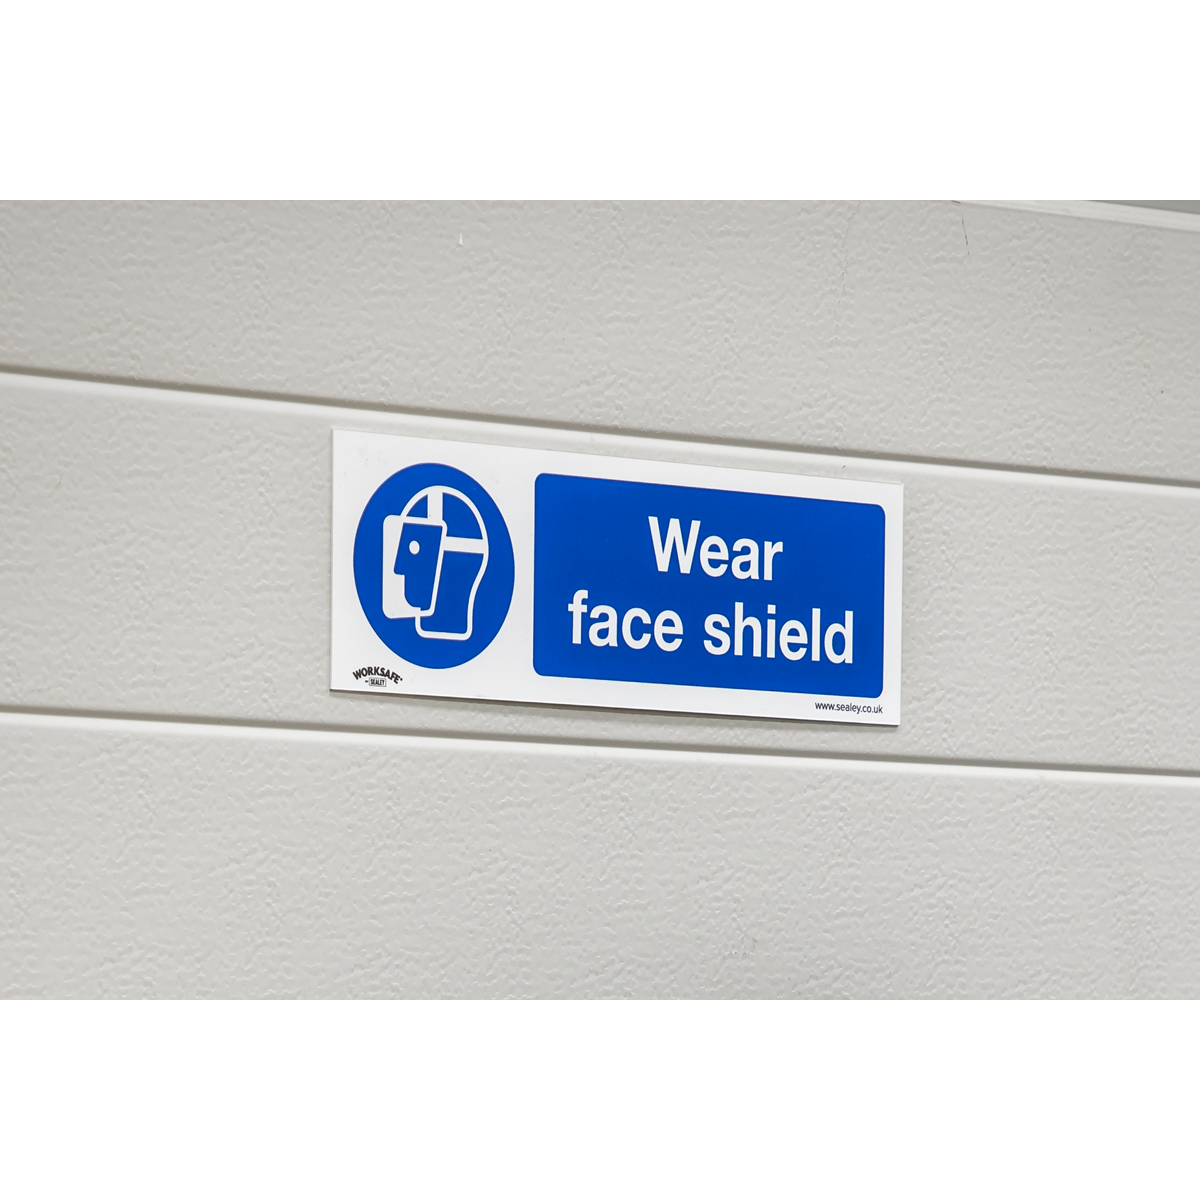 Mandatory Safety Sign - Wear Face Shield - Rigid Plastic